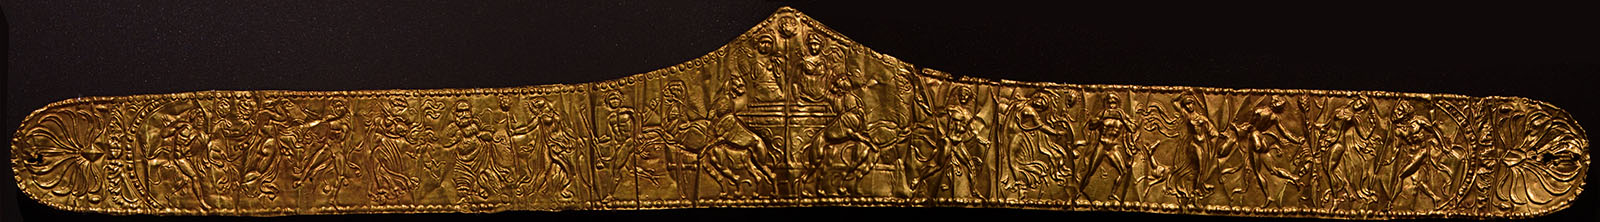 Istanbul Archaeology Museum Gold diadem late 4th C BCE Data 4096b2 panorama.jpg